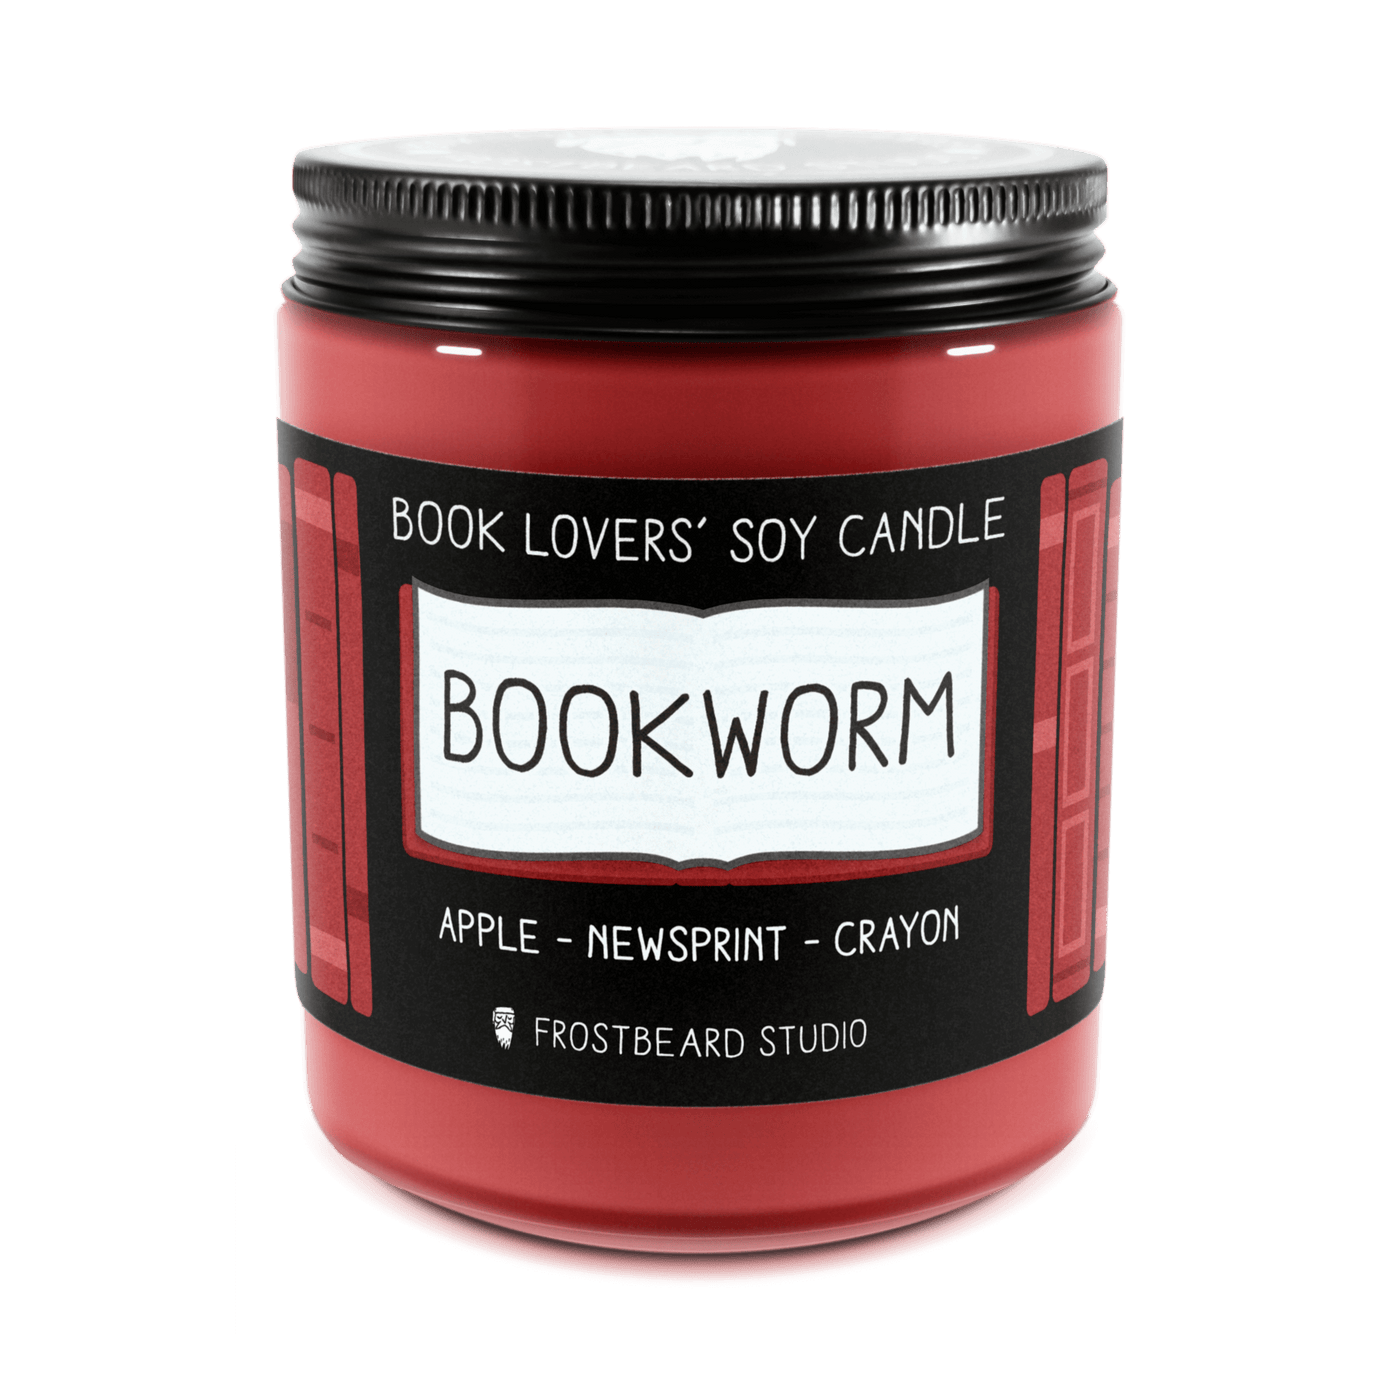 Bookworm  -  8 oz Jar  -  Book Lovers' Soy Candle  -  Frostbeard Studio